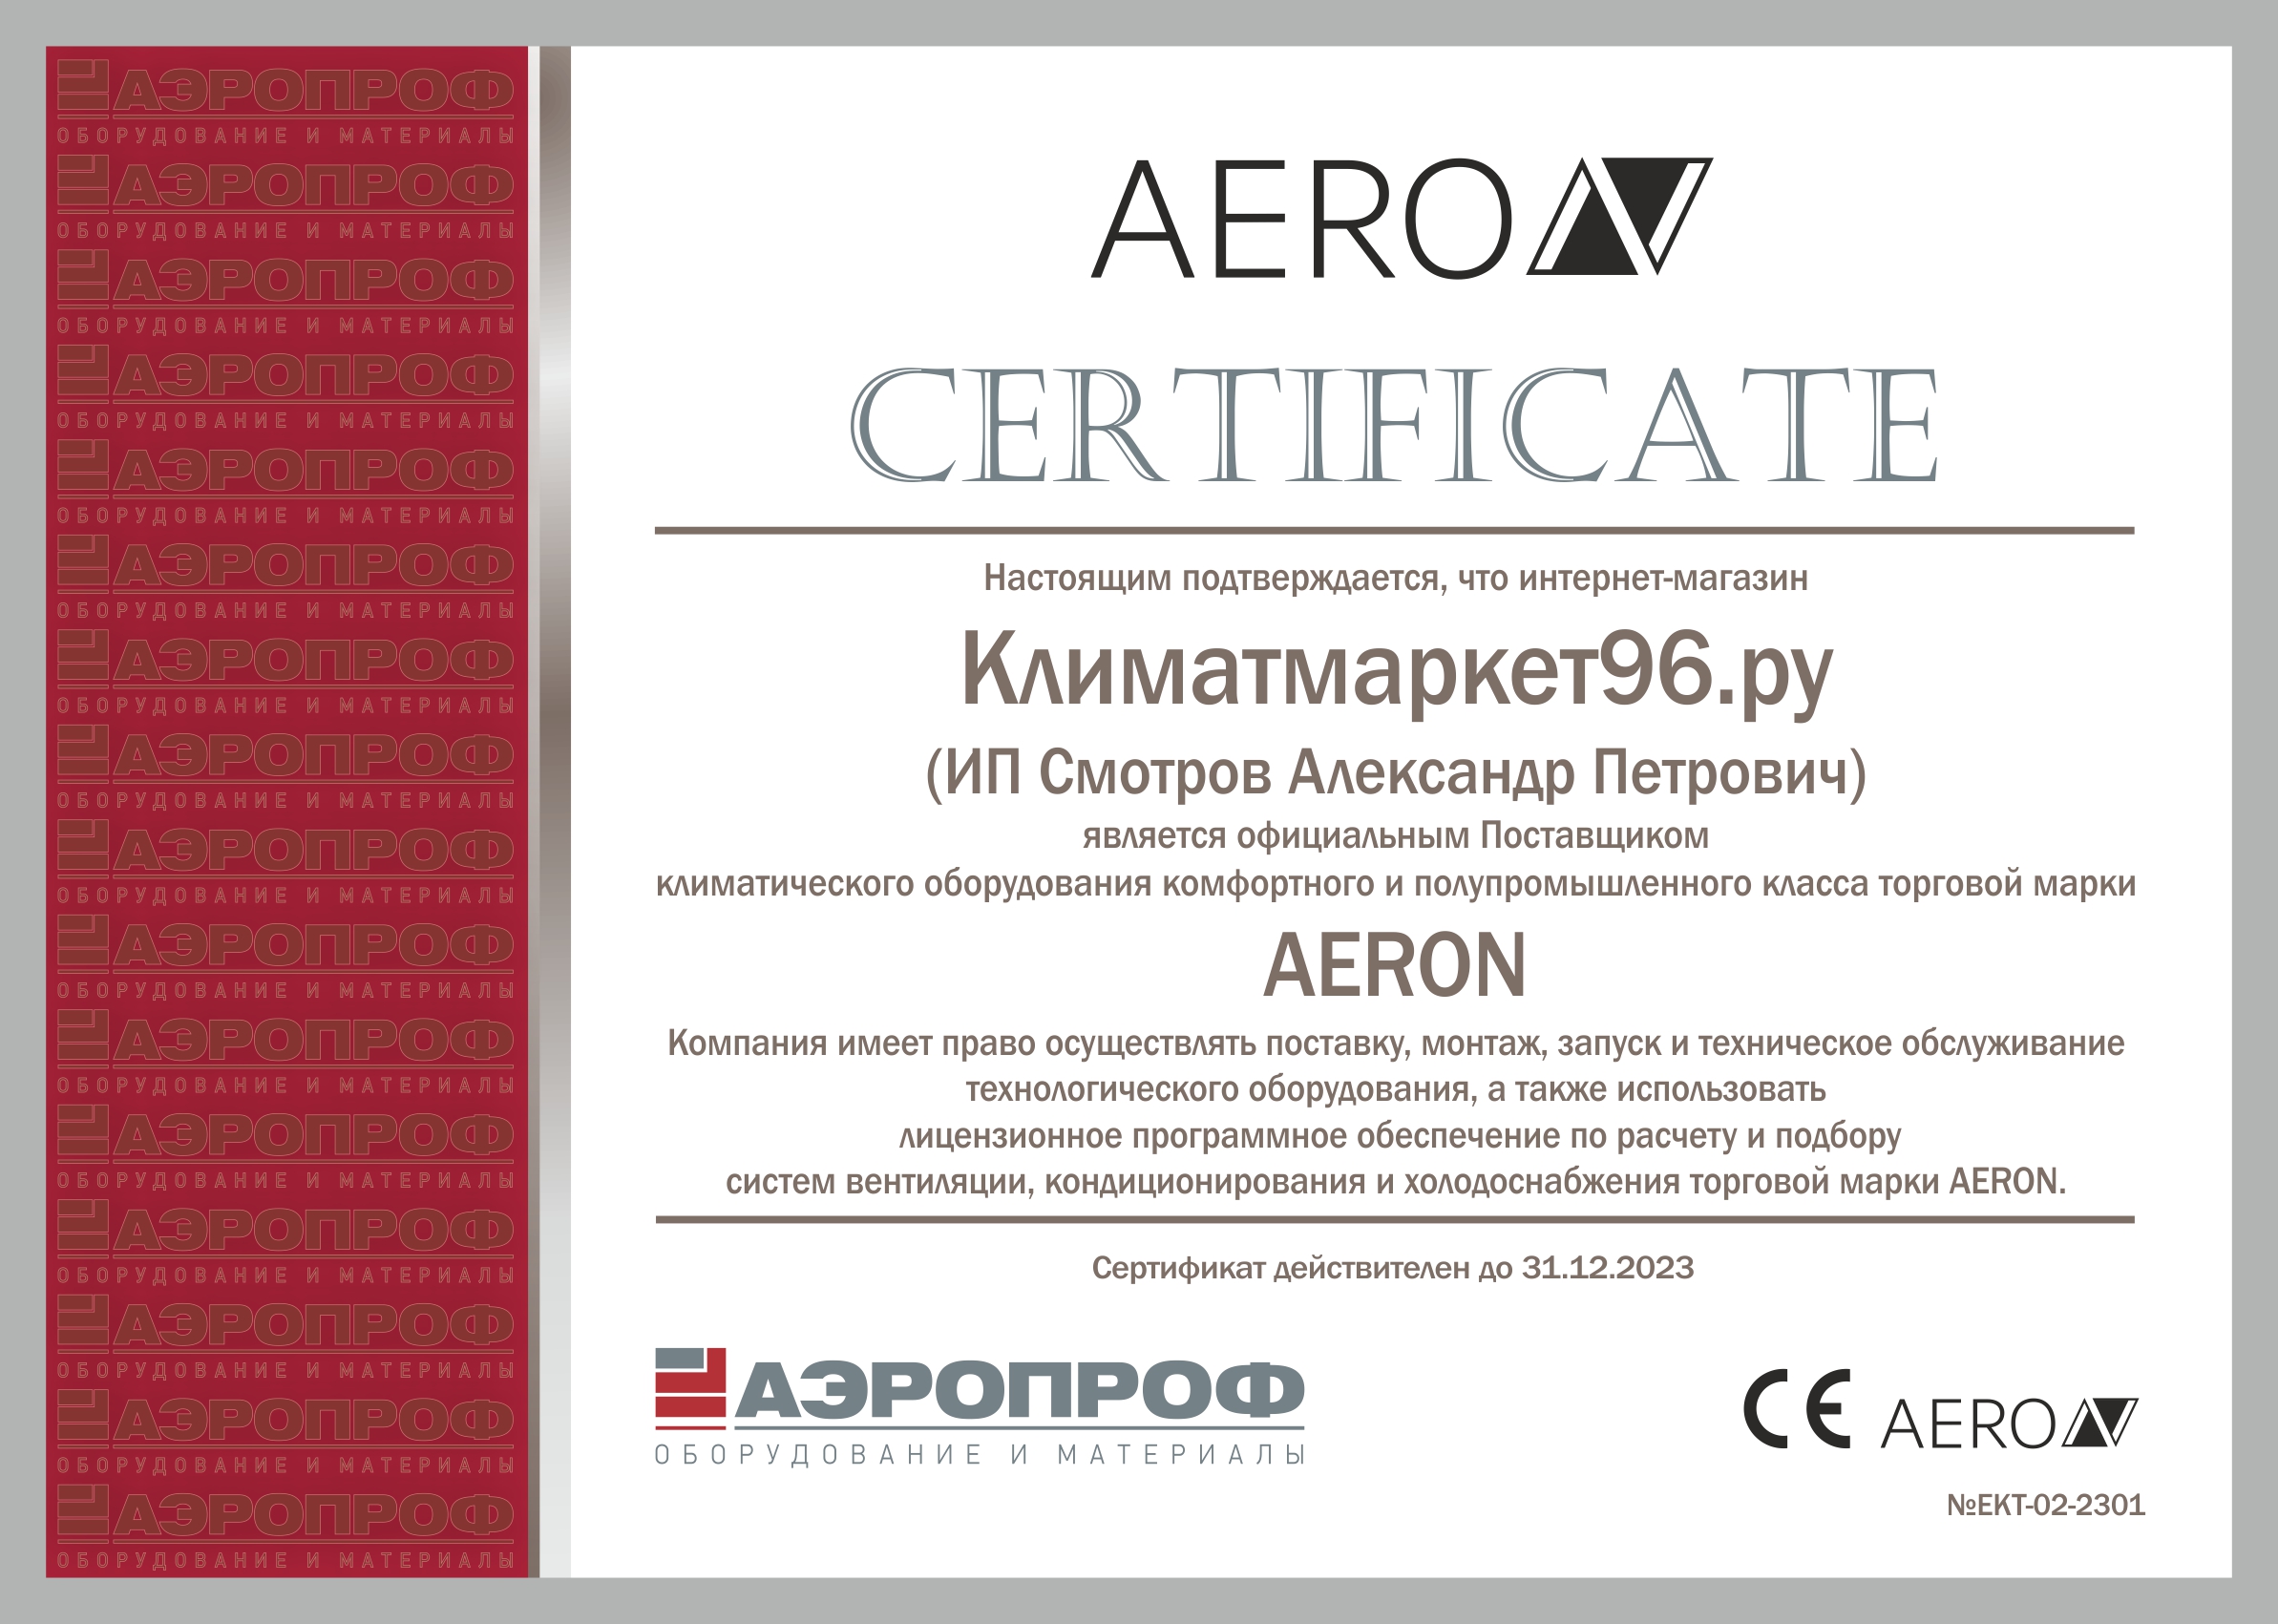 sert23-km96-aeron Kondicioner Aero ALRS-II-36IHA4-01/ALRS-II-36OHA4-01 kypit v Ekaterinbyrge v internet-magazine KlimatMarket96.ry Сертификат официального дилера